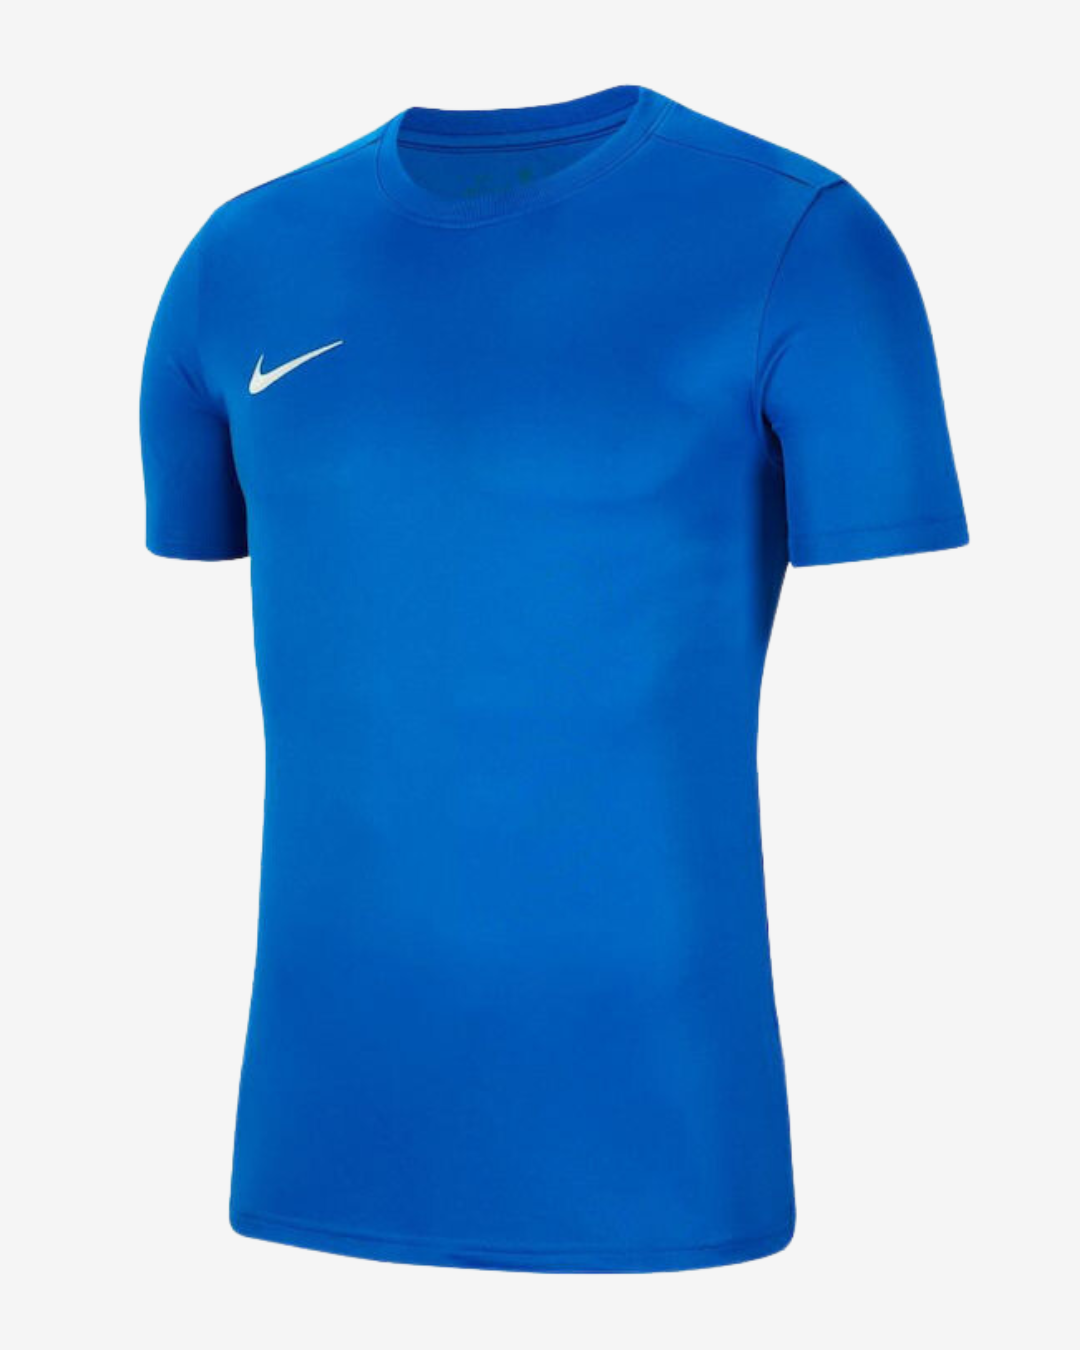 Nike Dri-fit park 7 t-shirt - Blå - Str. S - Modish.dk